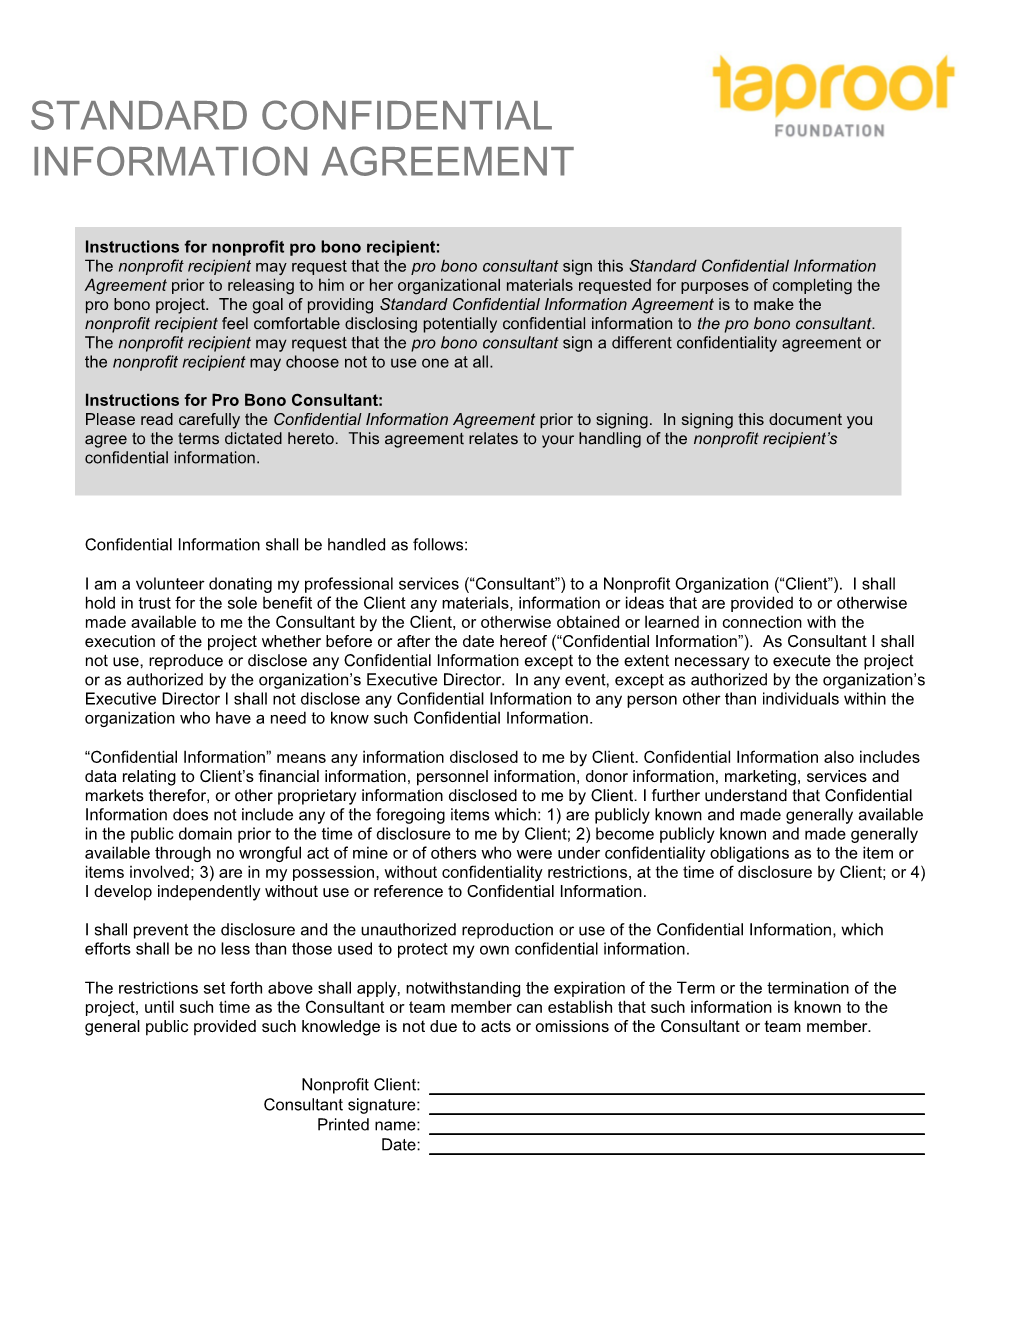 Standard Confidential Information Agreement